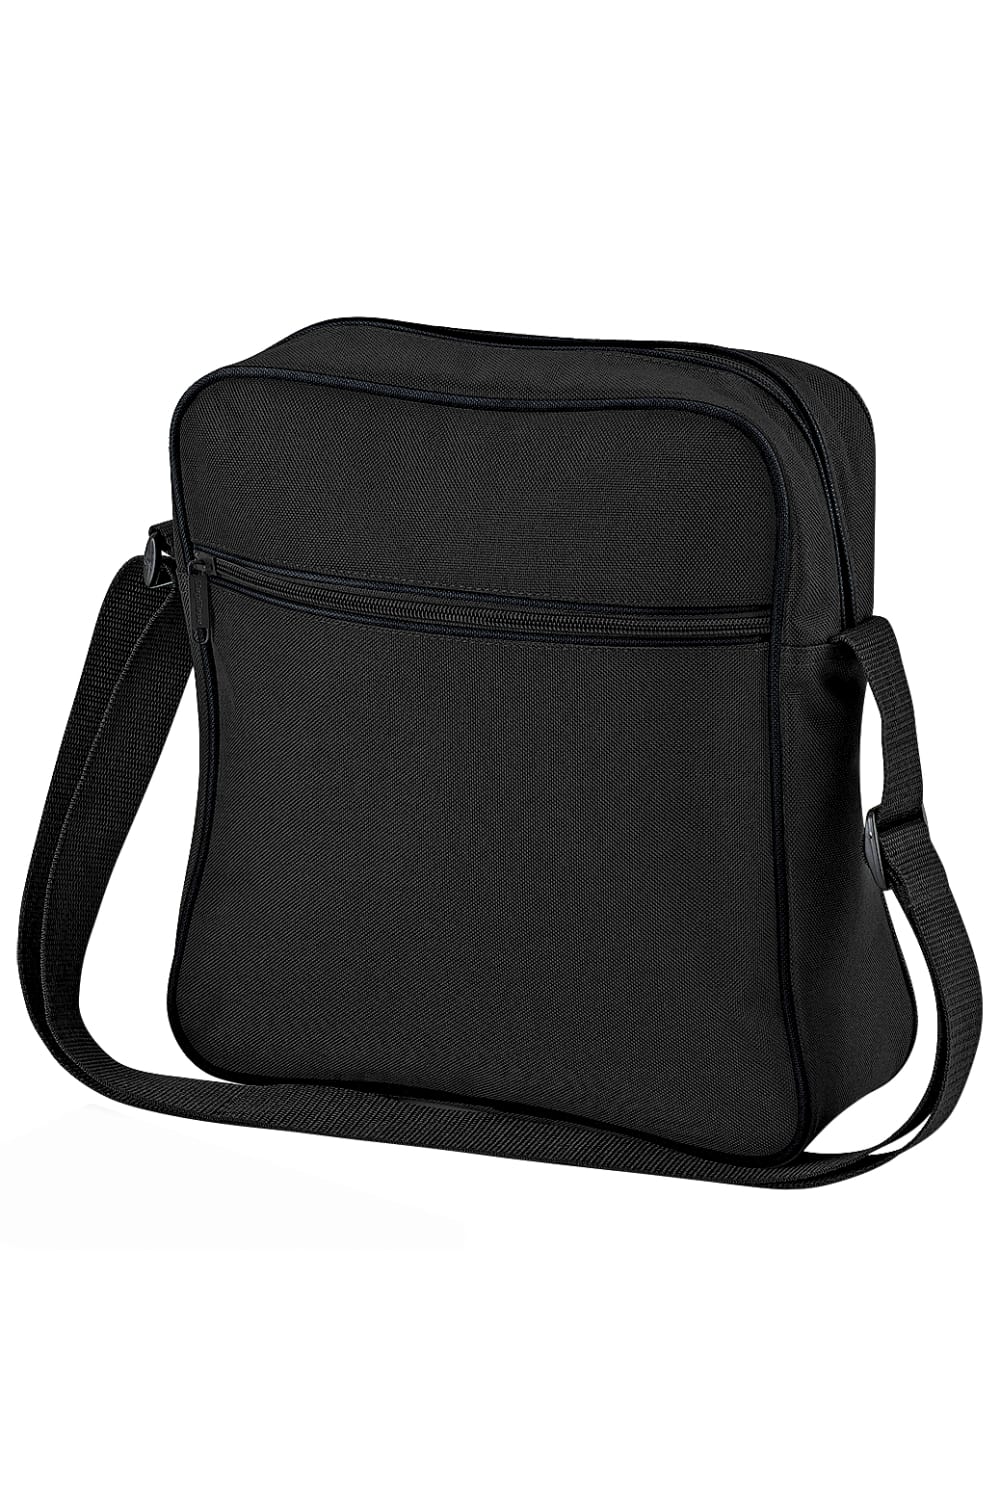 Retro Flight / Travel Bag 1.8 Gallons- Black/Dark Graphite